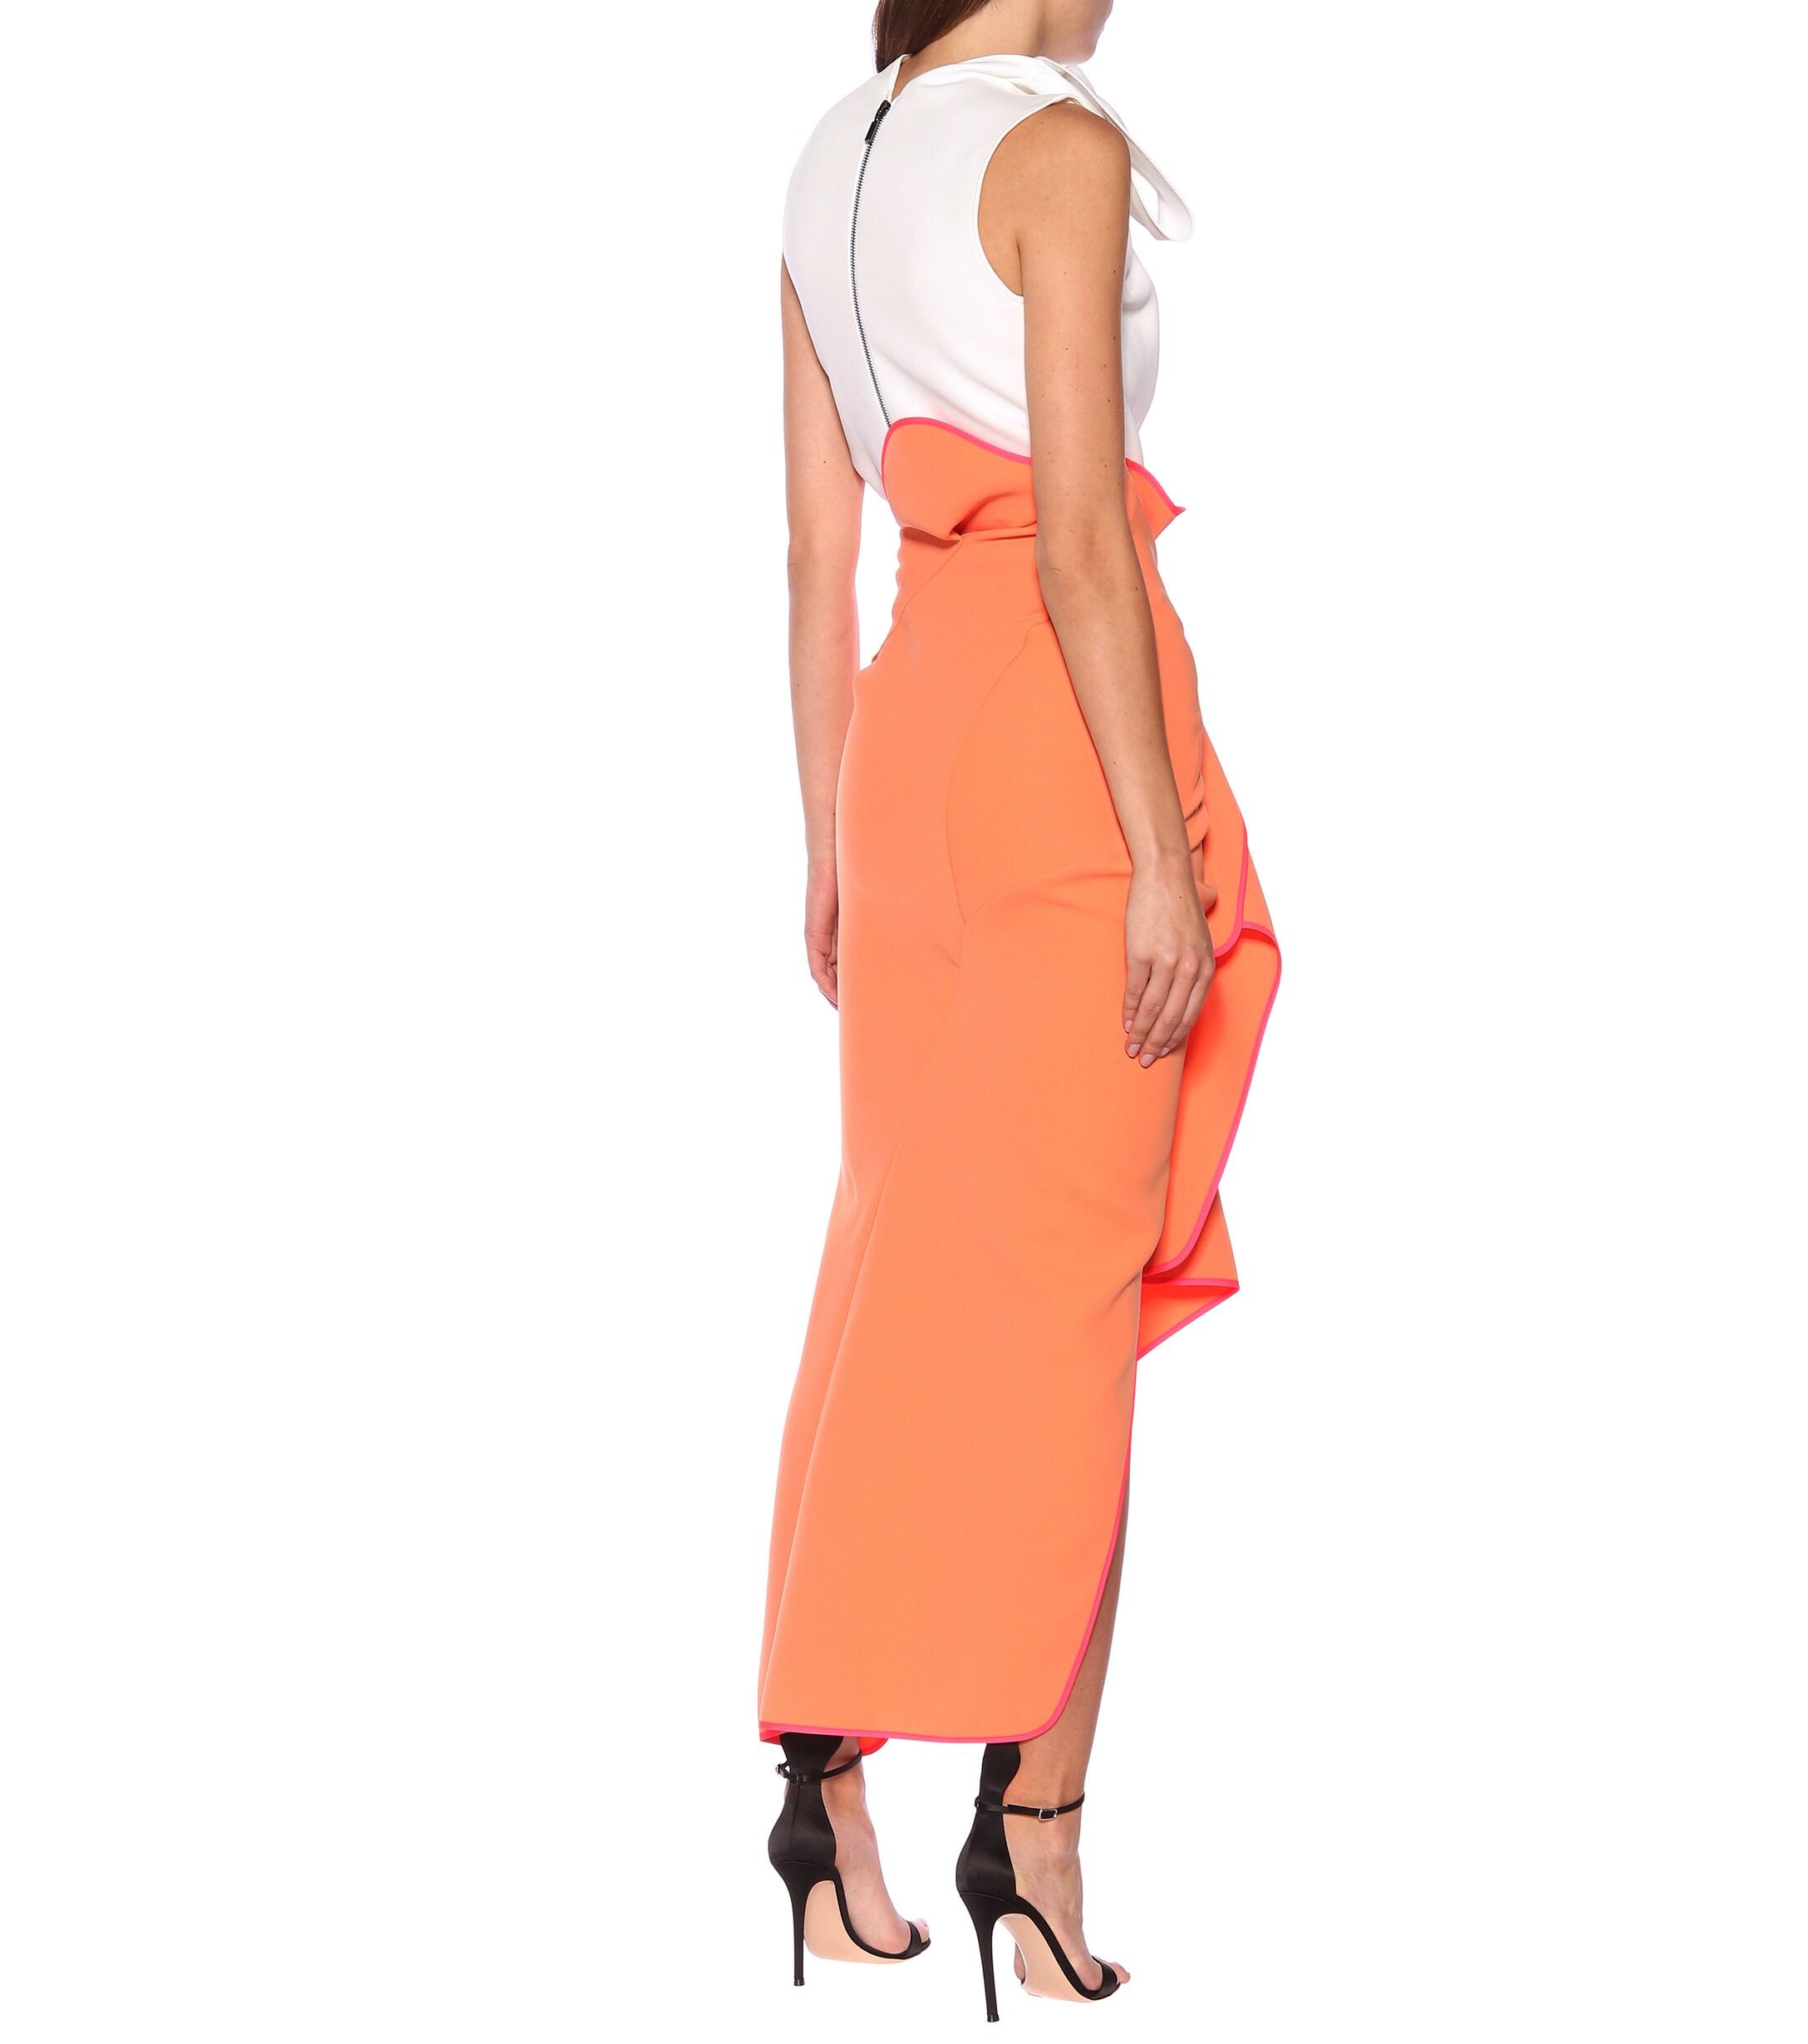 Maticevski Ephemeral Maxi Skirt in Orange - Lyst